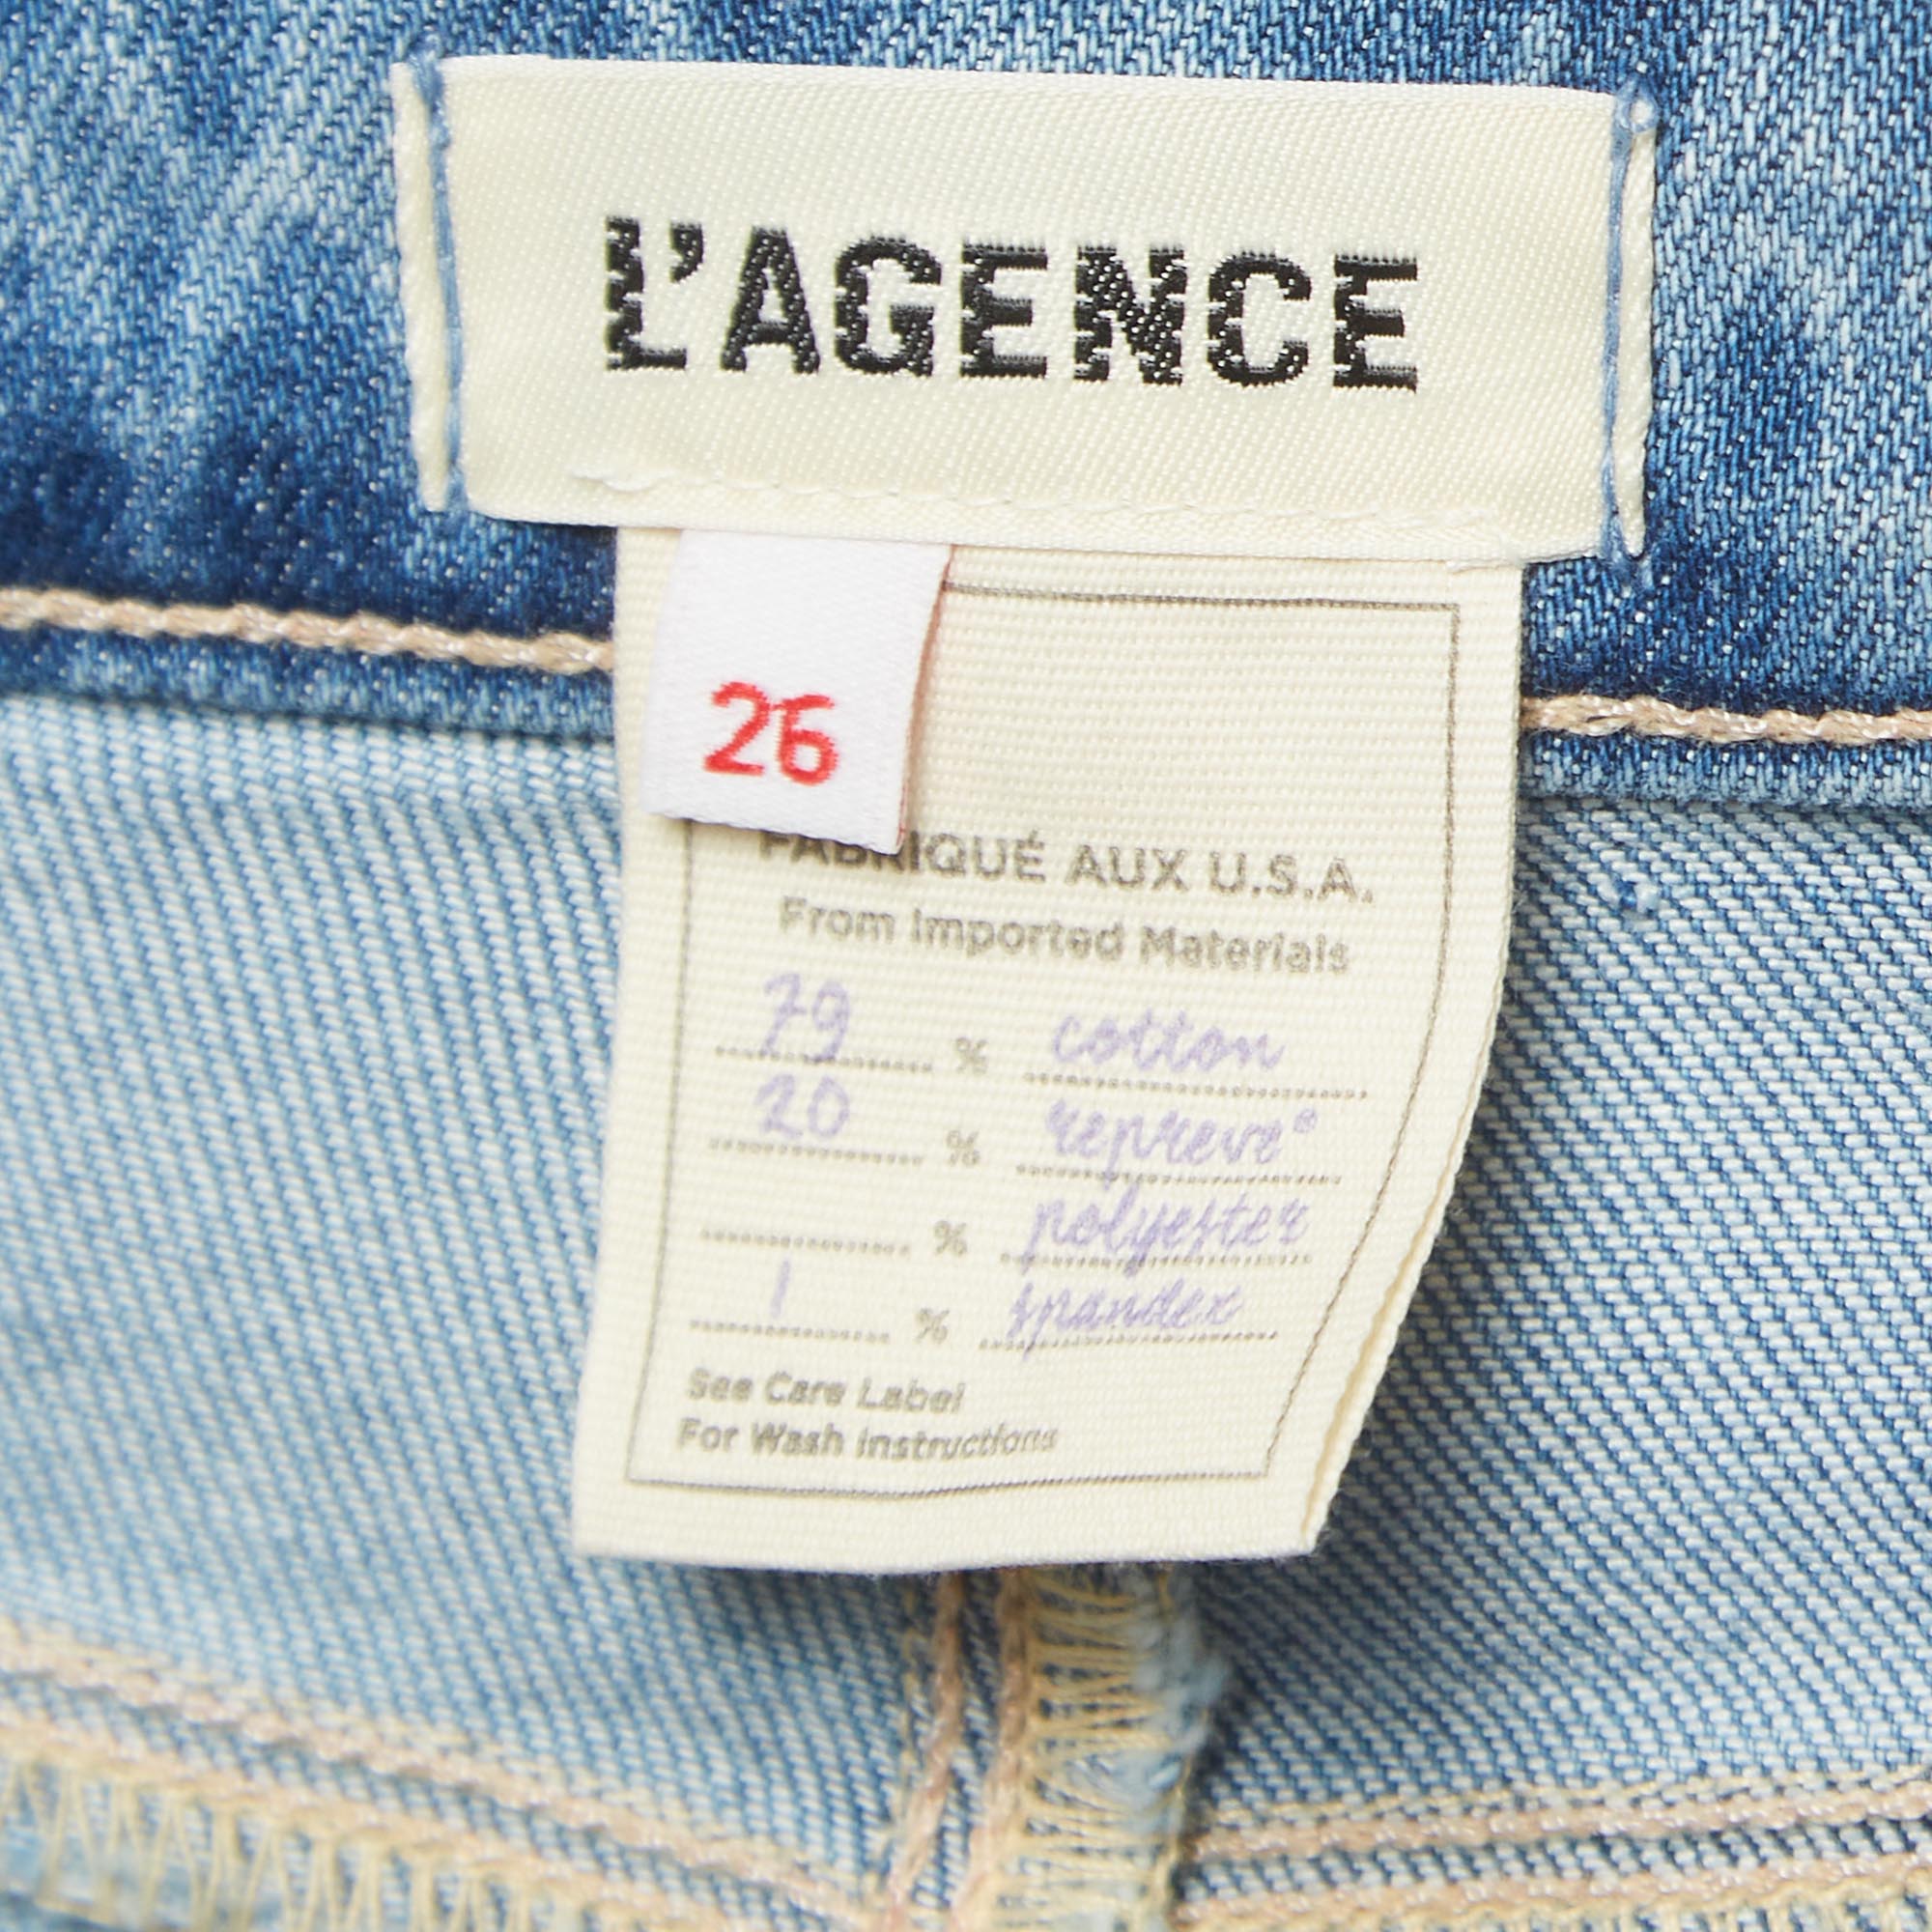 L'agence Blue Washed Denim Flared Jeans S Waist 26